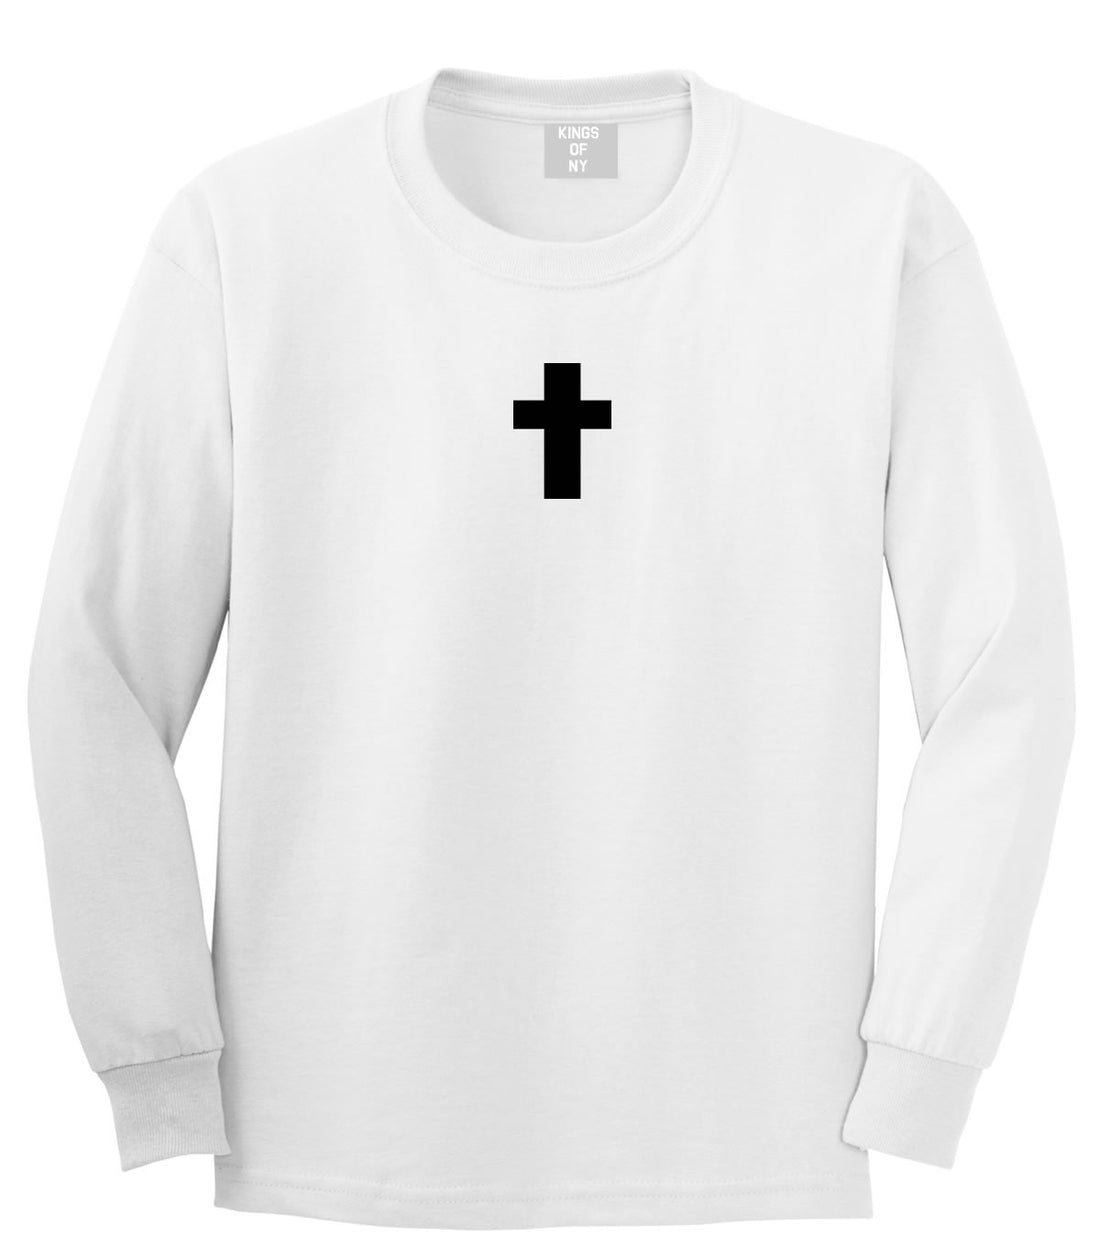 Small Cross Long Sleeve T-Shirt